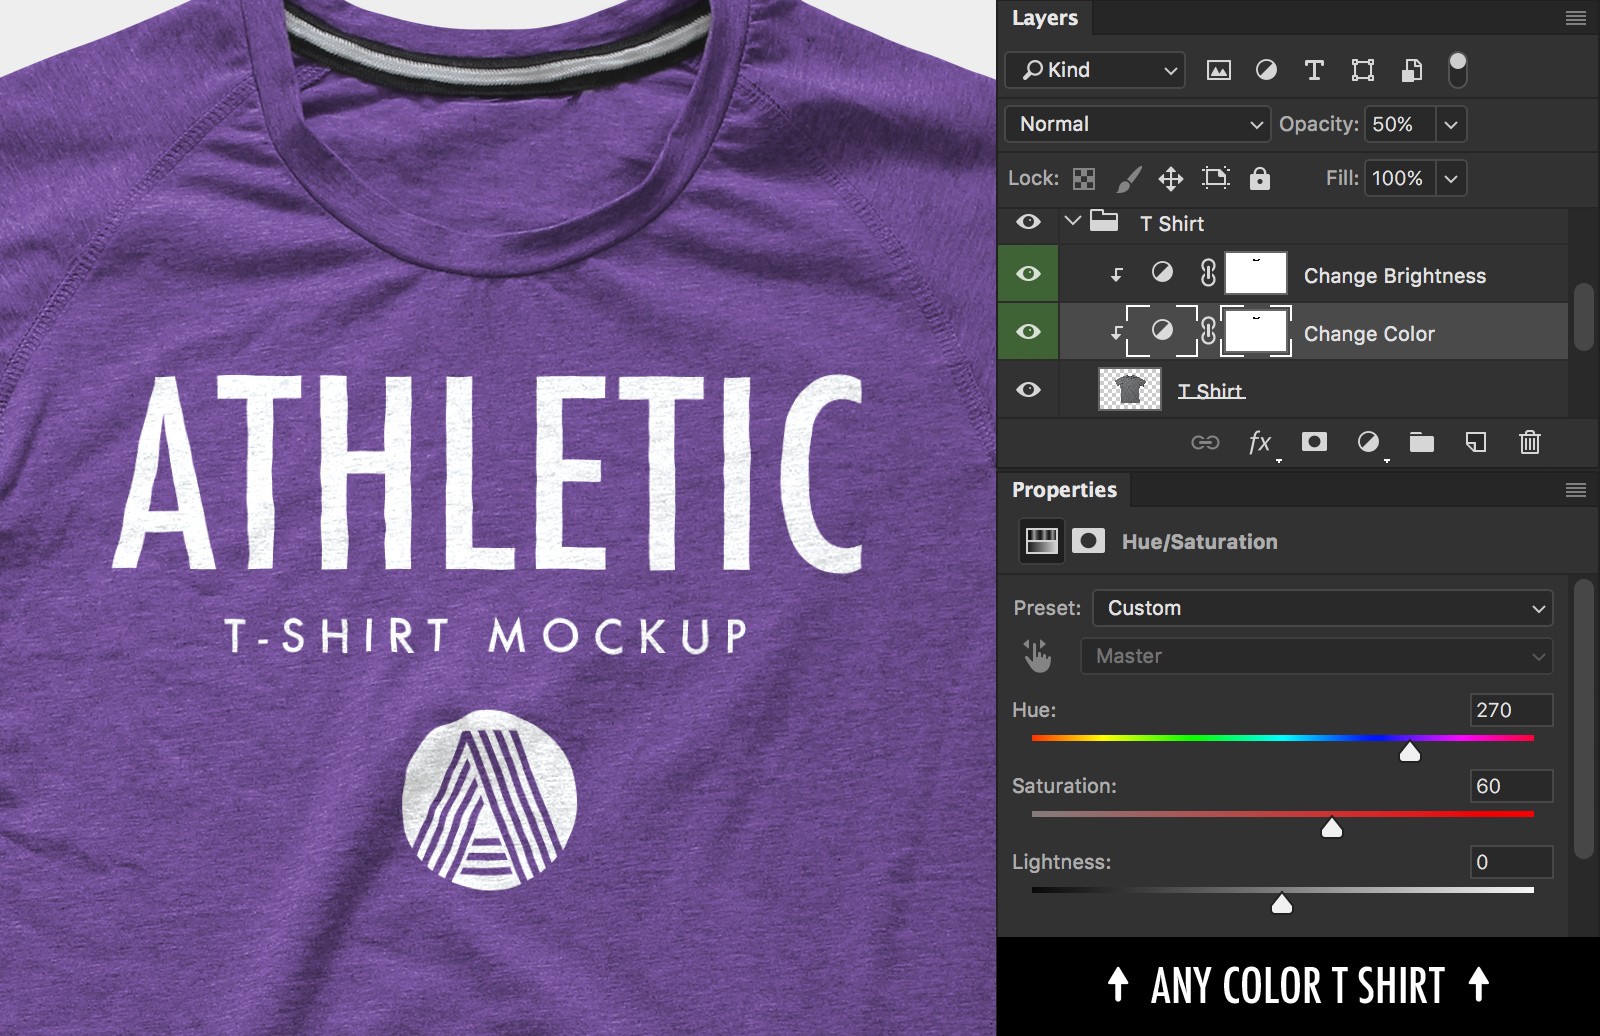 经典运动T恤样机 Athletic T-Shirt Mockup PSD插图(3)